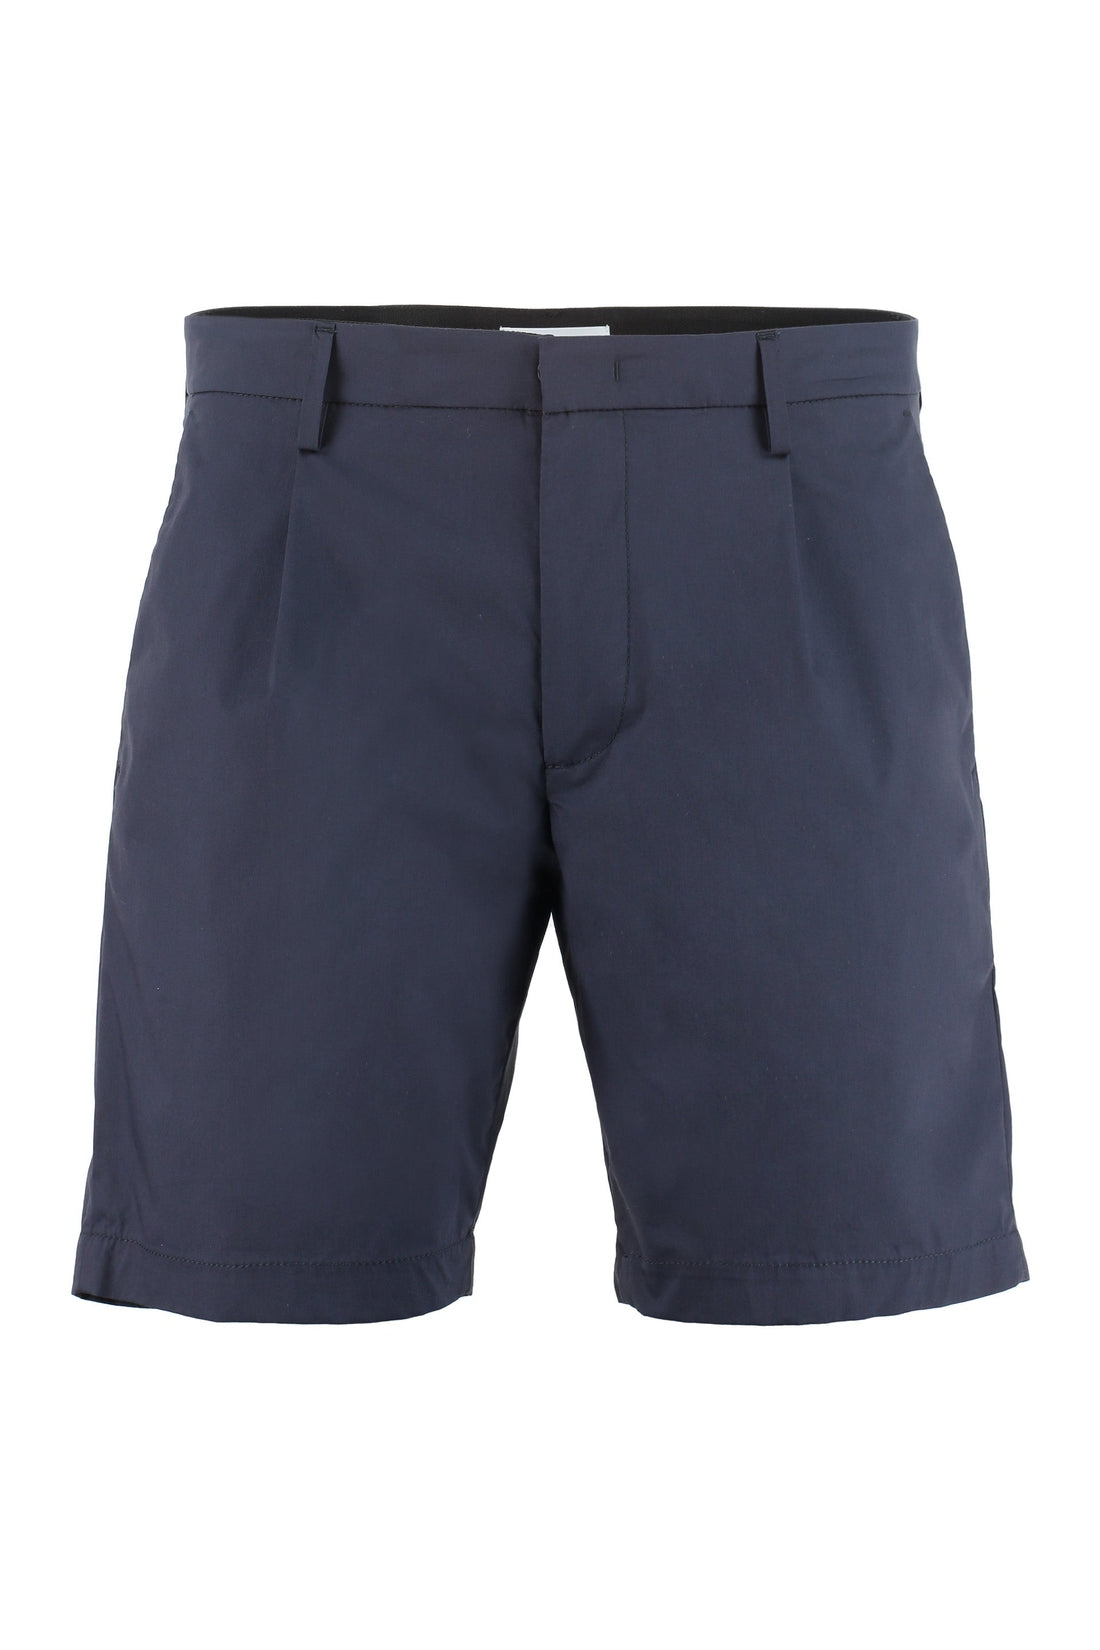 Dondup-OUTLET-SALE-Fergus short chino trousers-ARCHIVIST